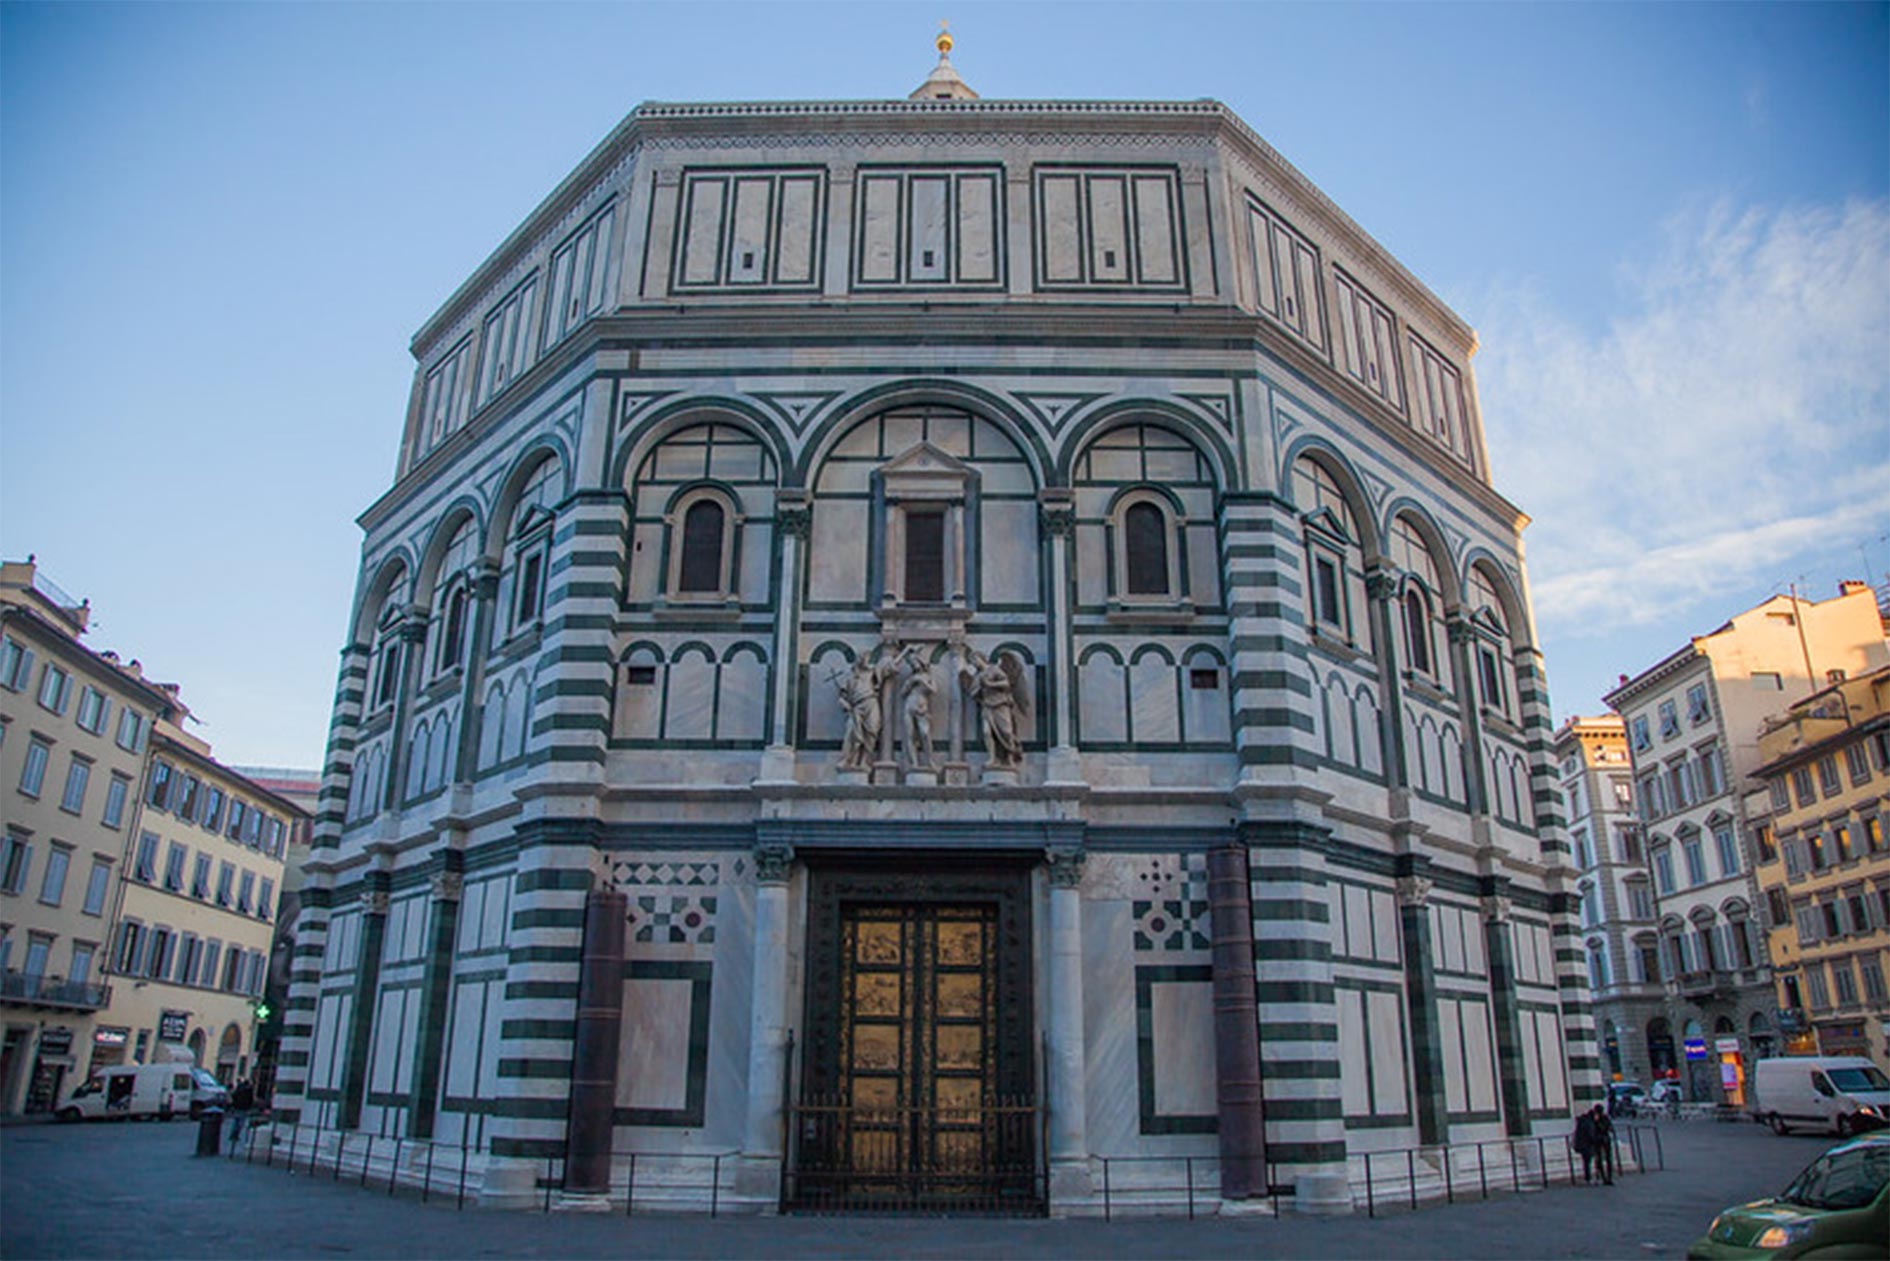 The Florence Baptistery - Battistero di San Giovanni